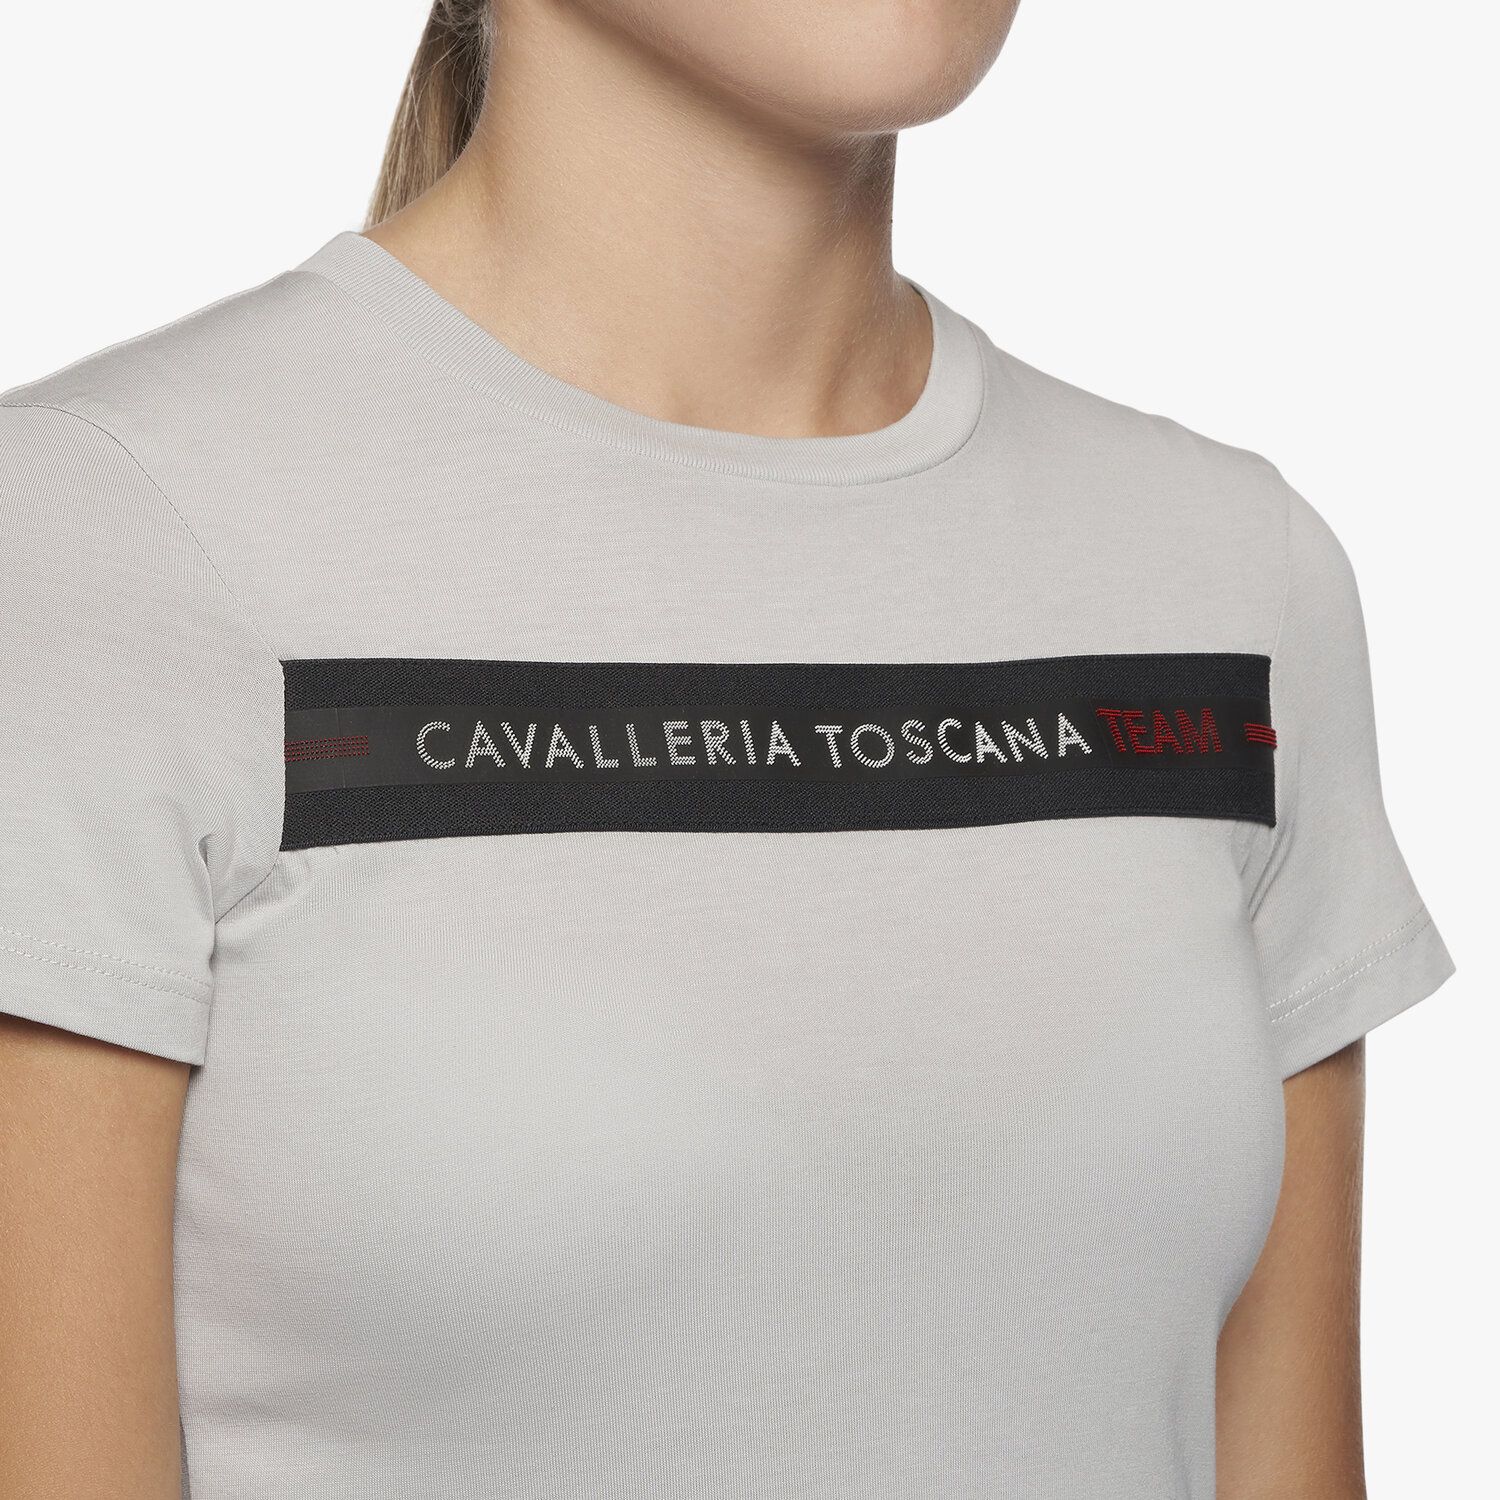 Cavalleria Toscana CT TEAM GIRL'S T-SHIRT LIGHT GREY-6